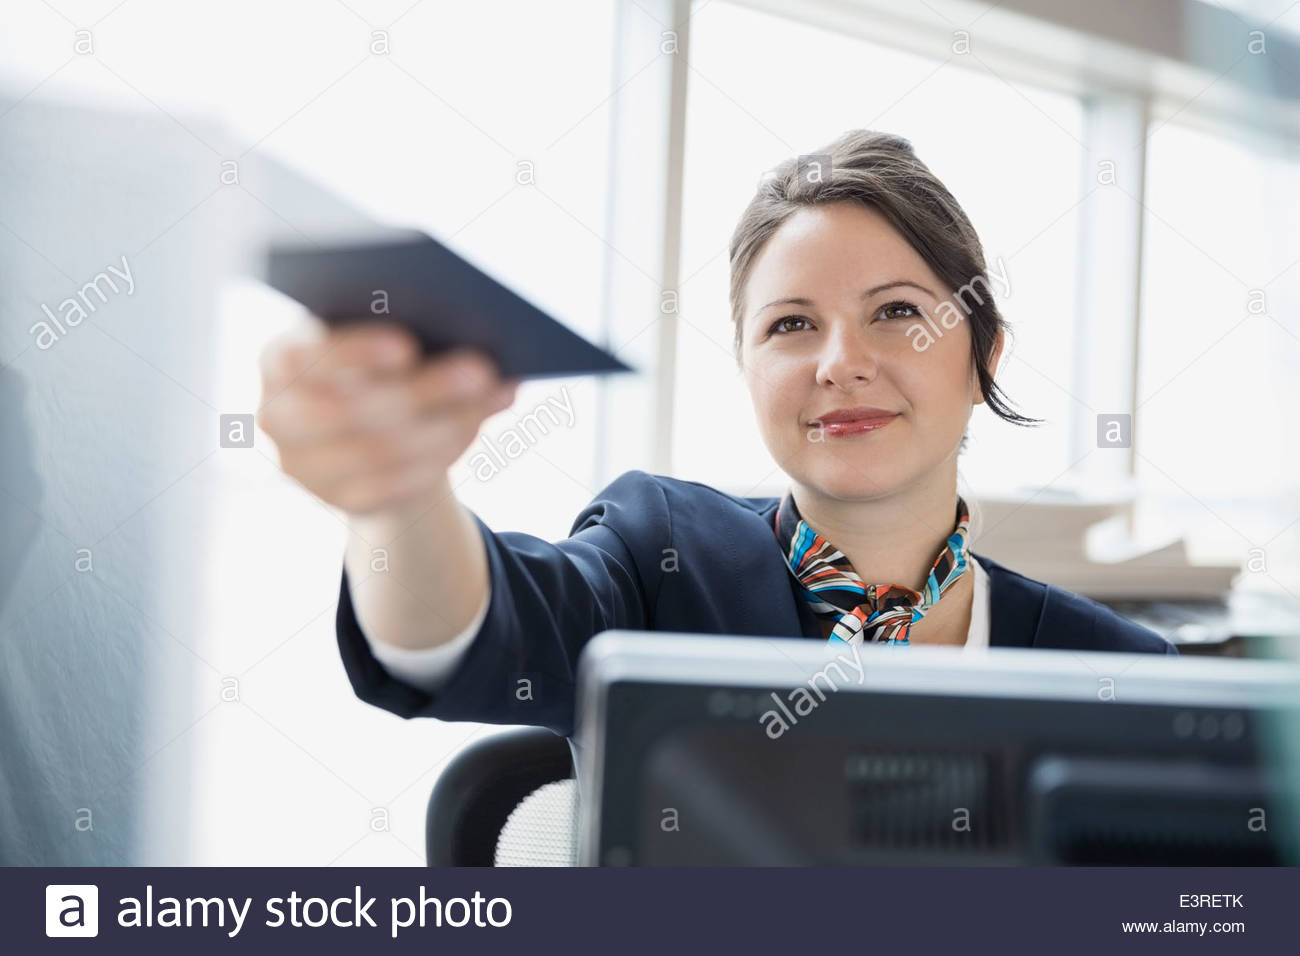 Airport customer service representative holding passport Stock Photo